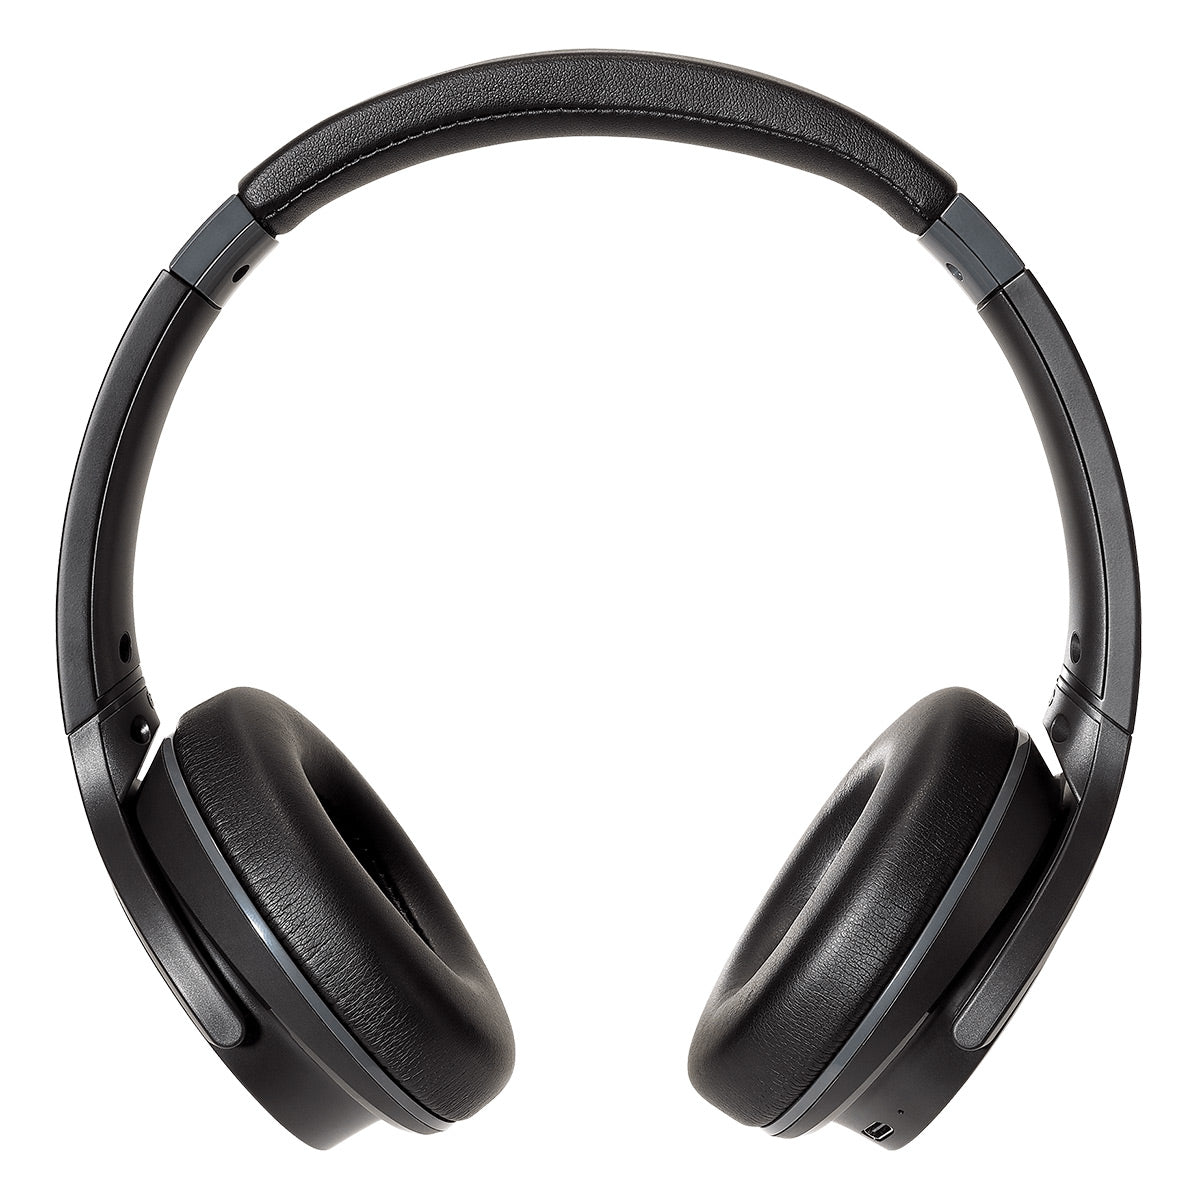 AudioTechnica ATH-S220BT Wireless On-Ear Headphones (Black)